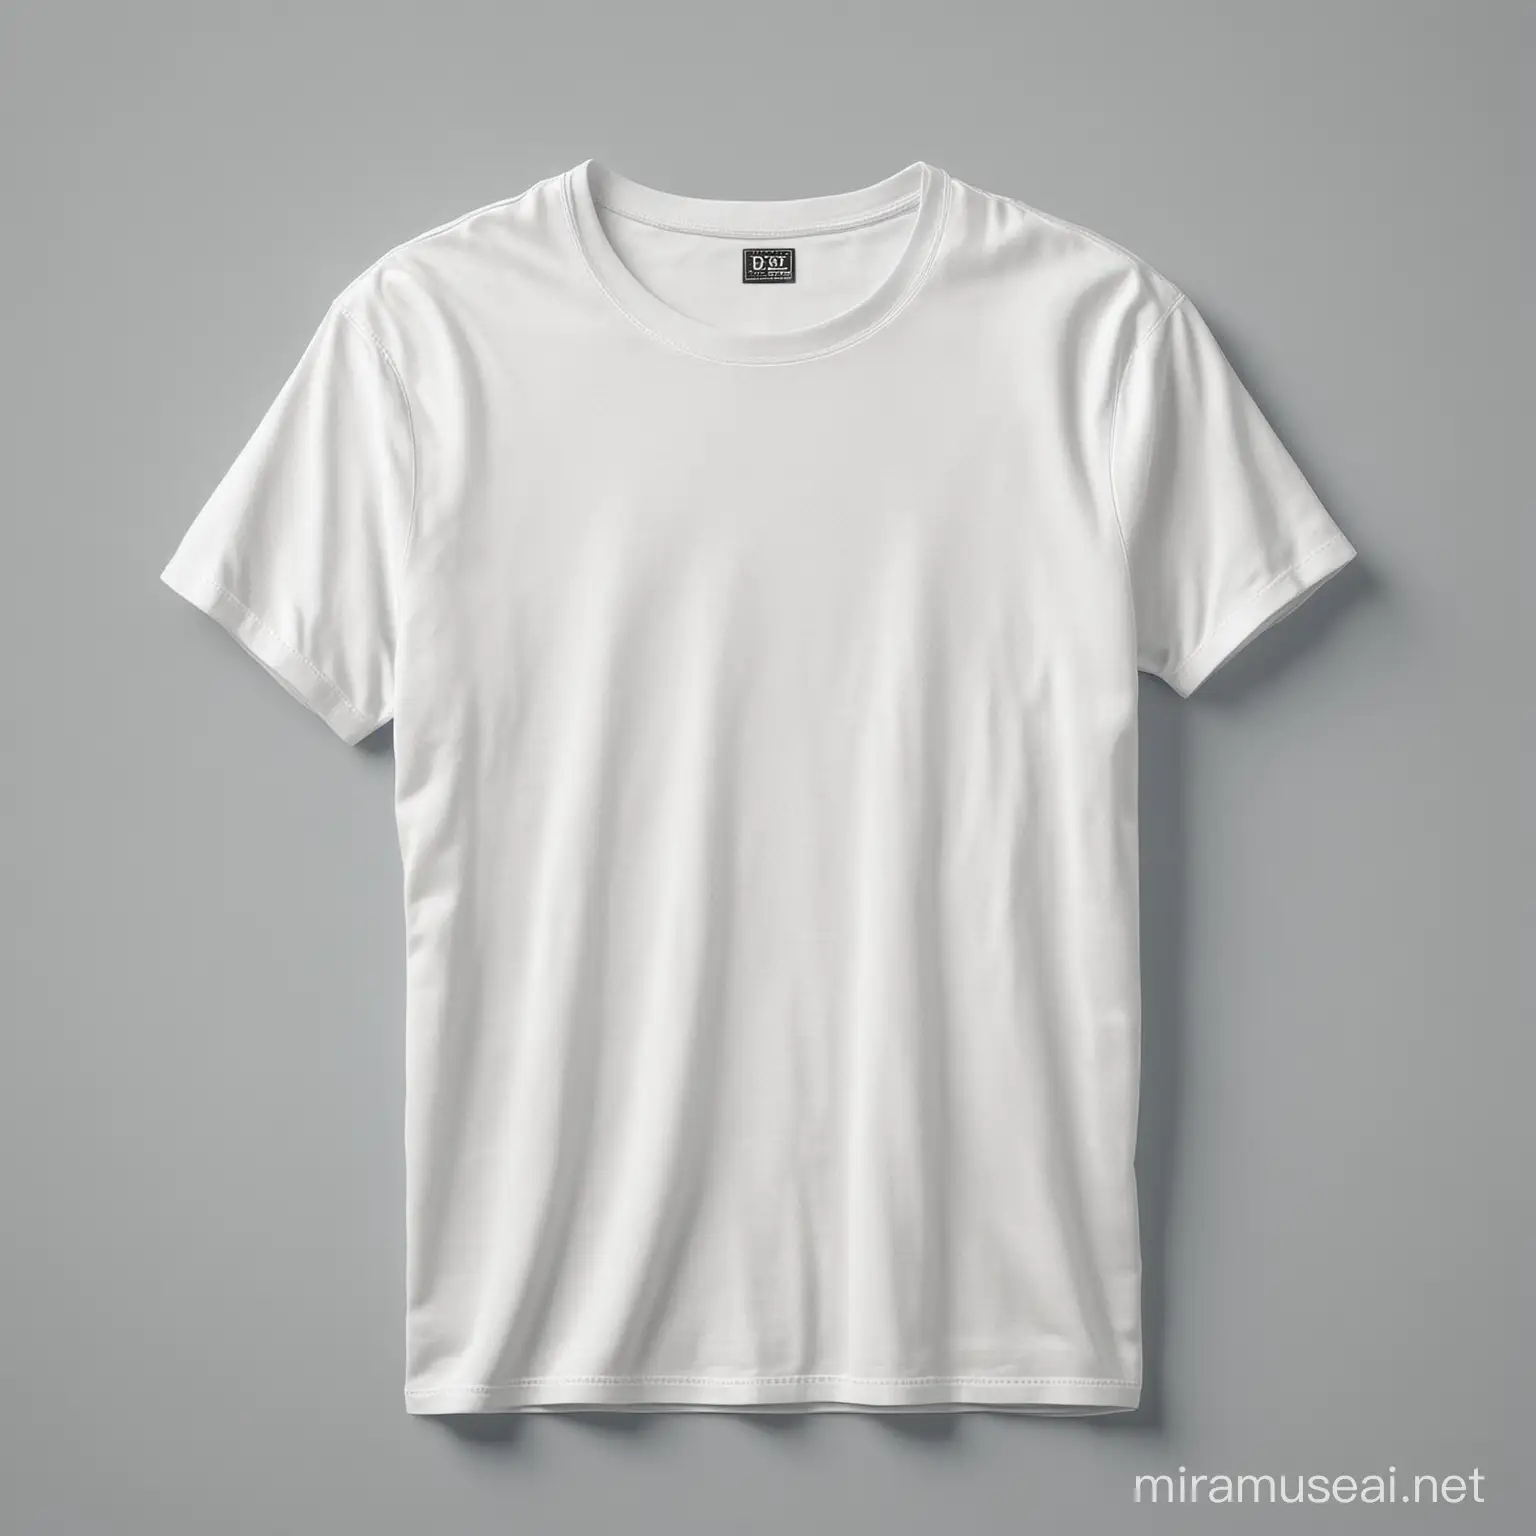 Mockup of White TShirt for Versatile Apparel Display